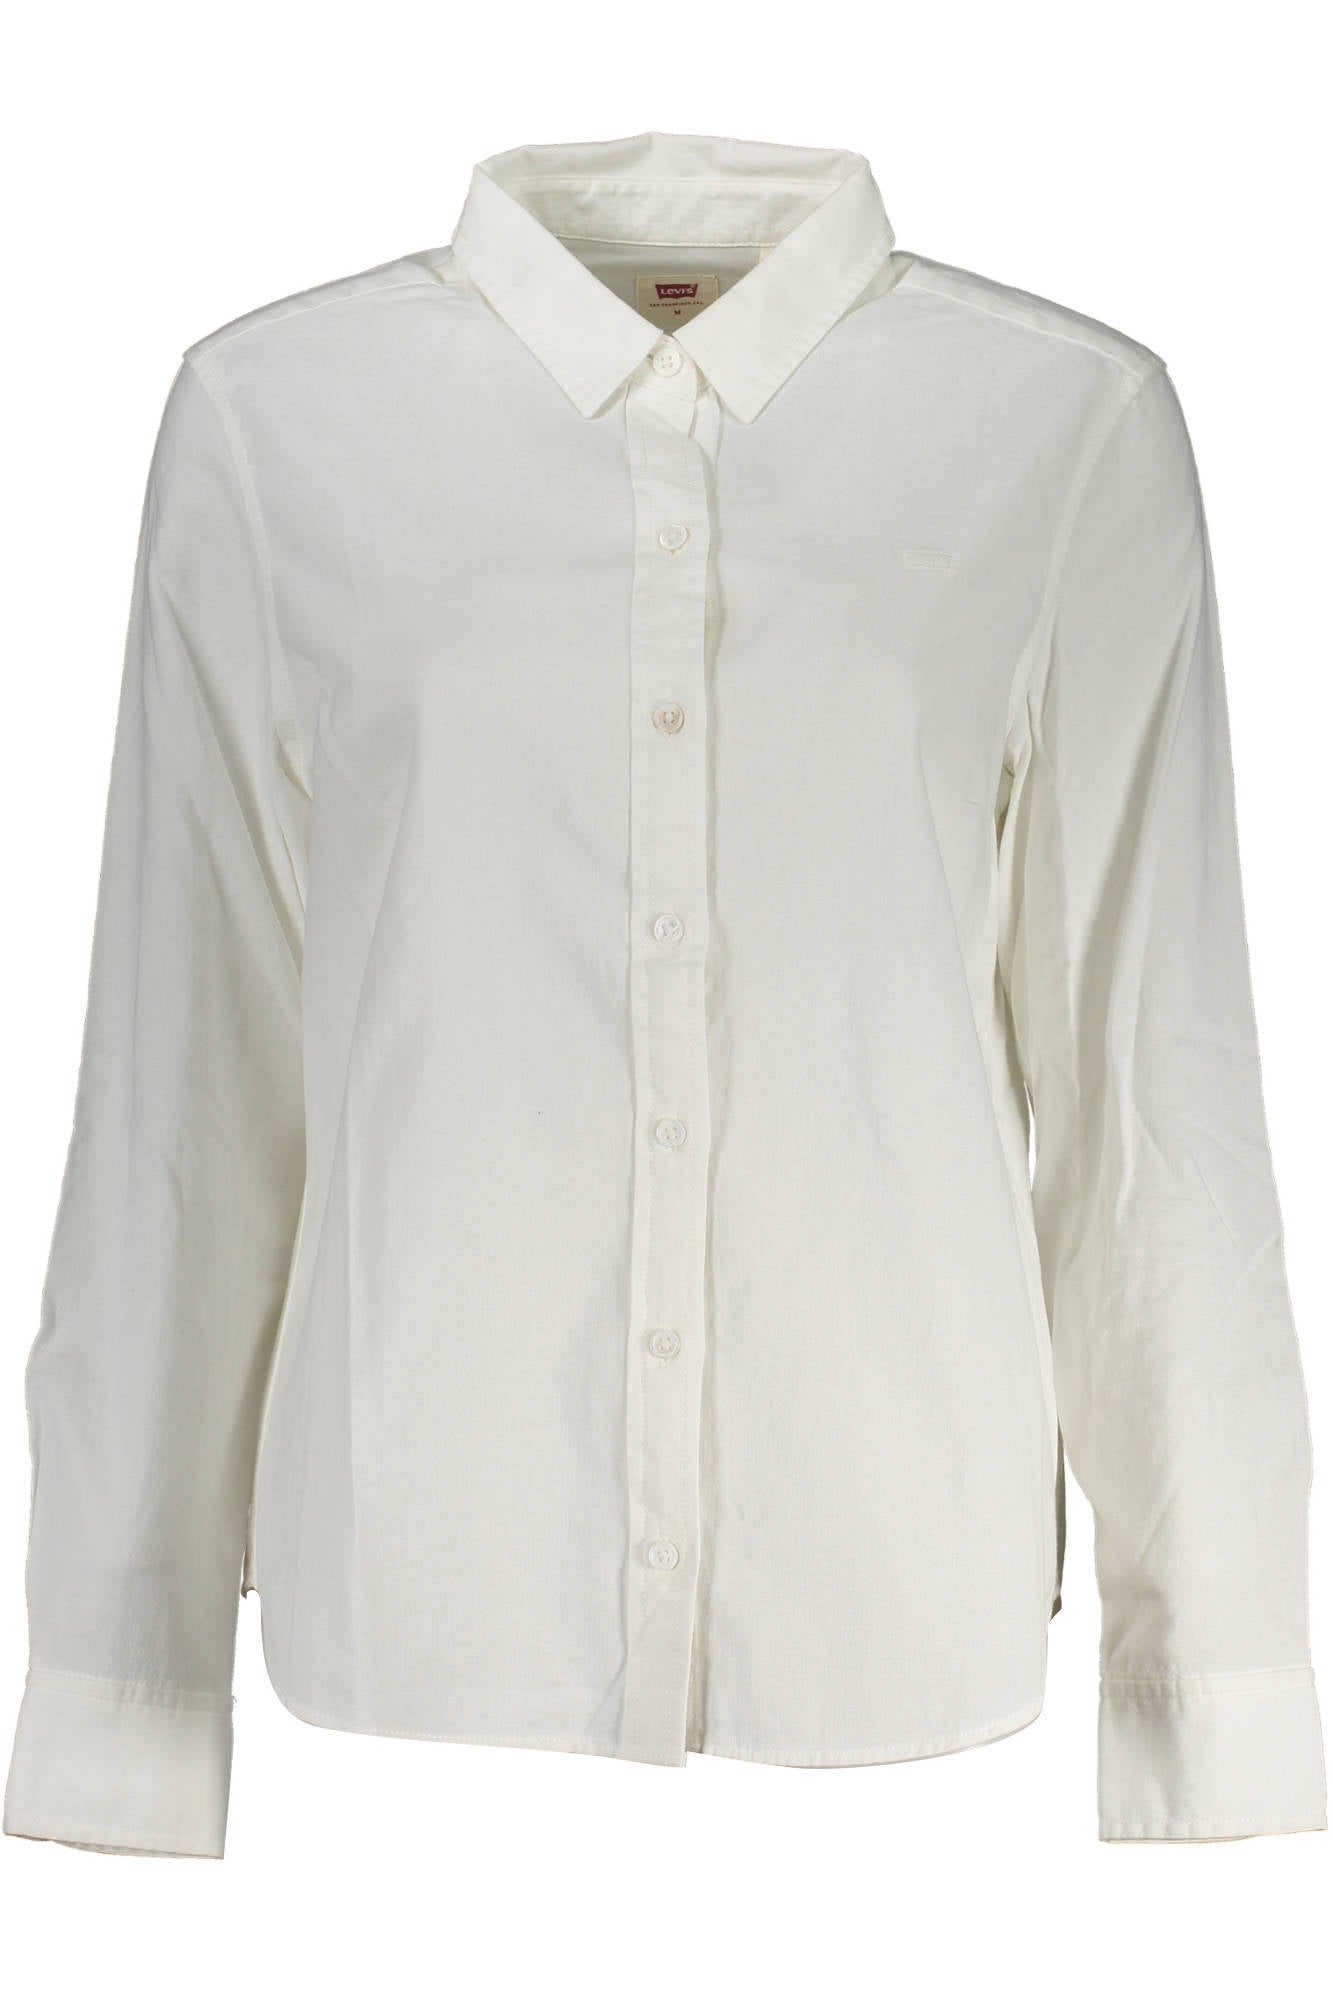 Levi's White Shirt - Fizigo